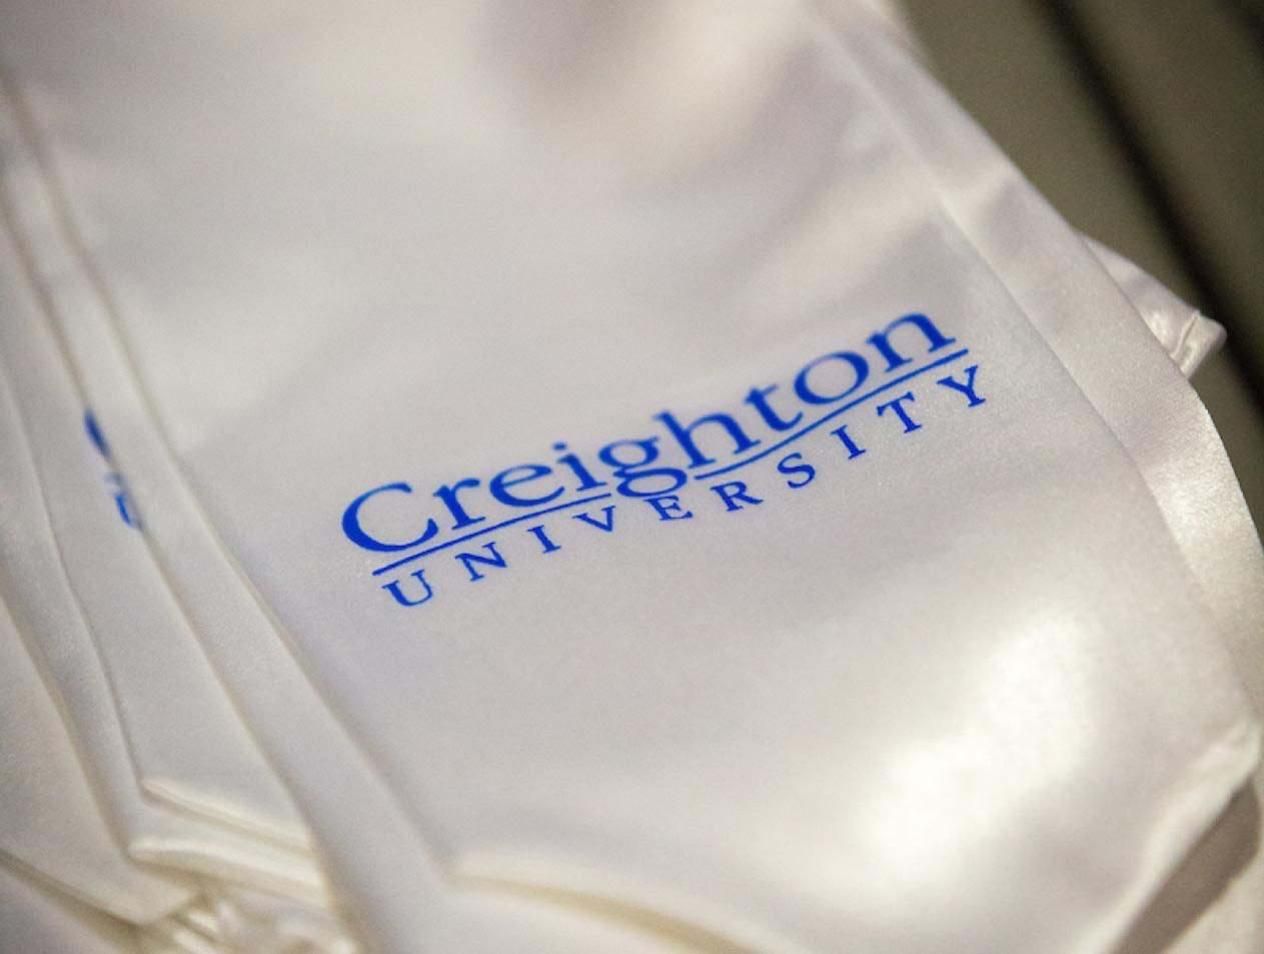 Creighton University sash